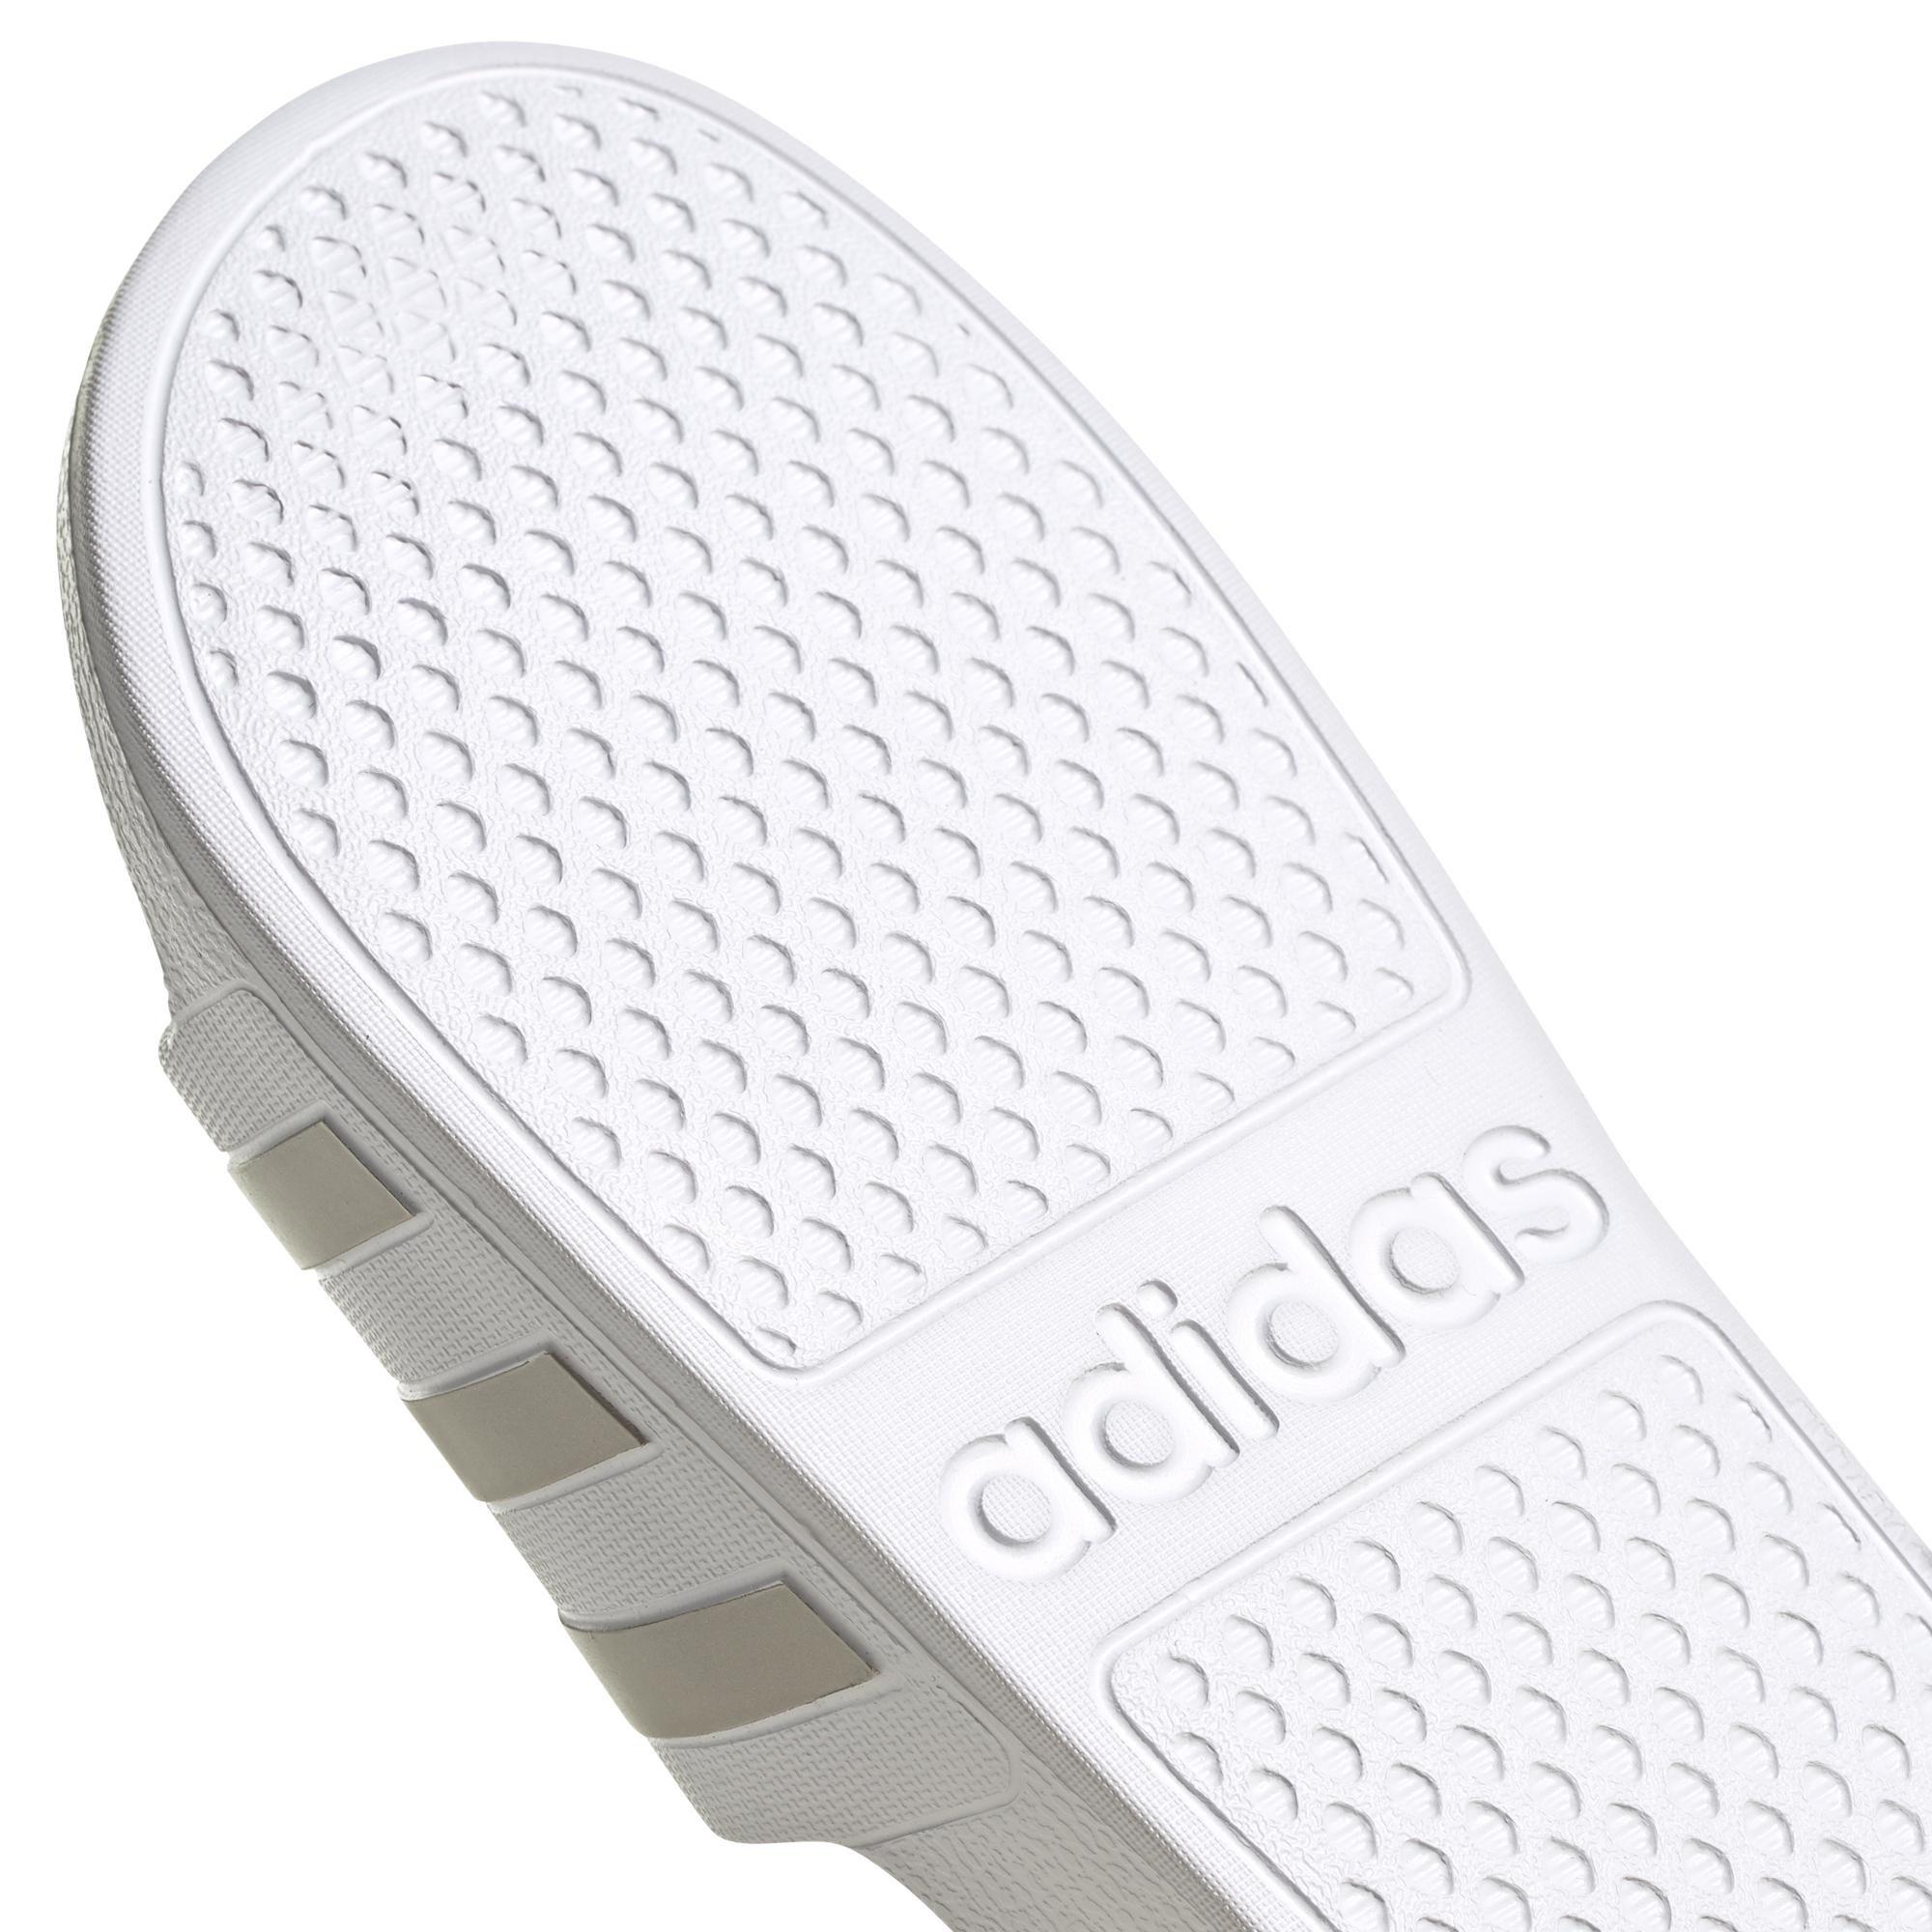 adidas - Unisex Adilette Aqua Slides, white